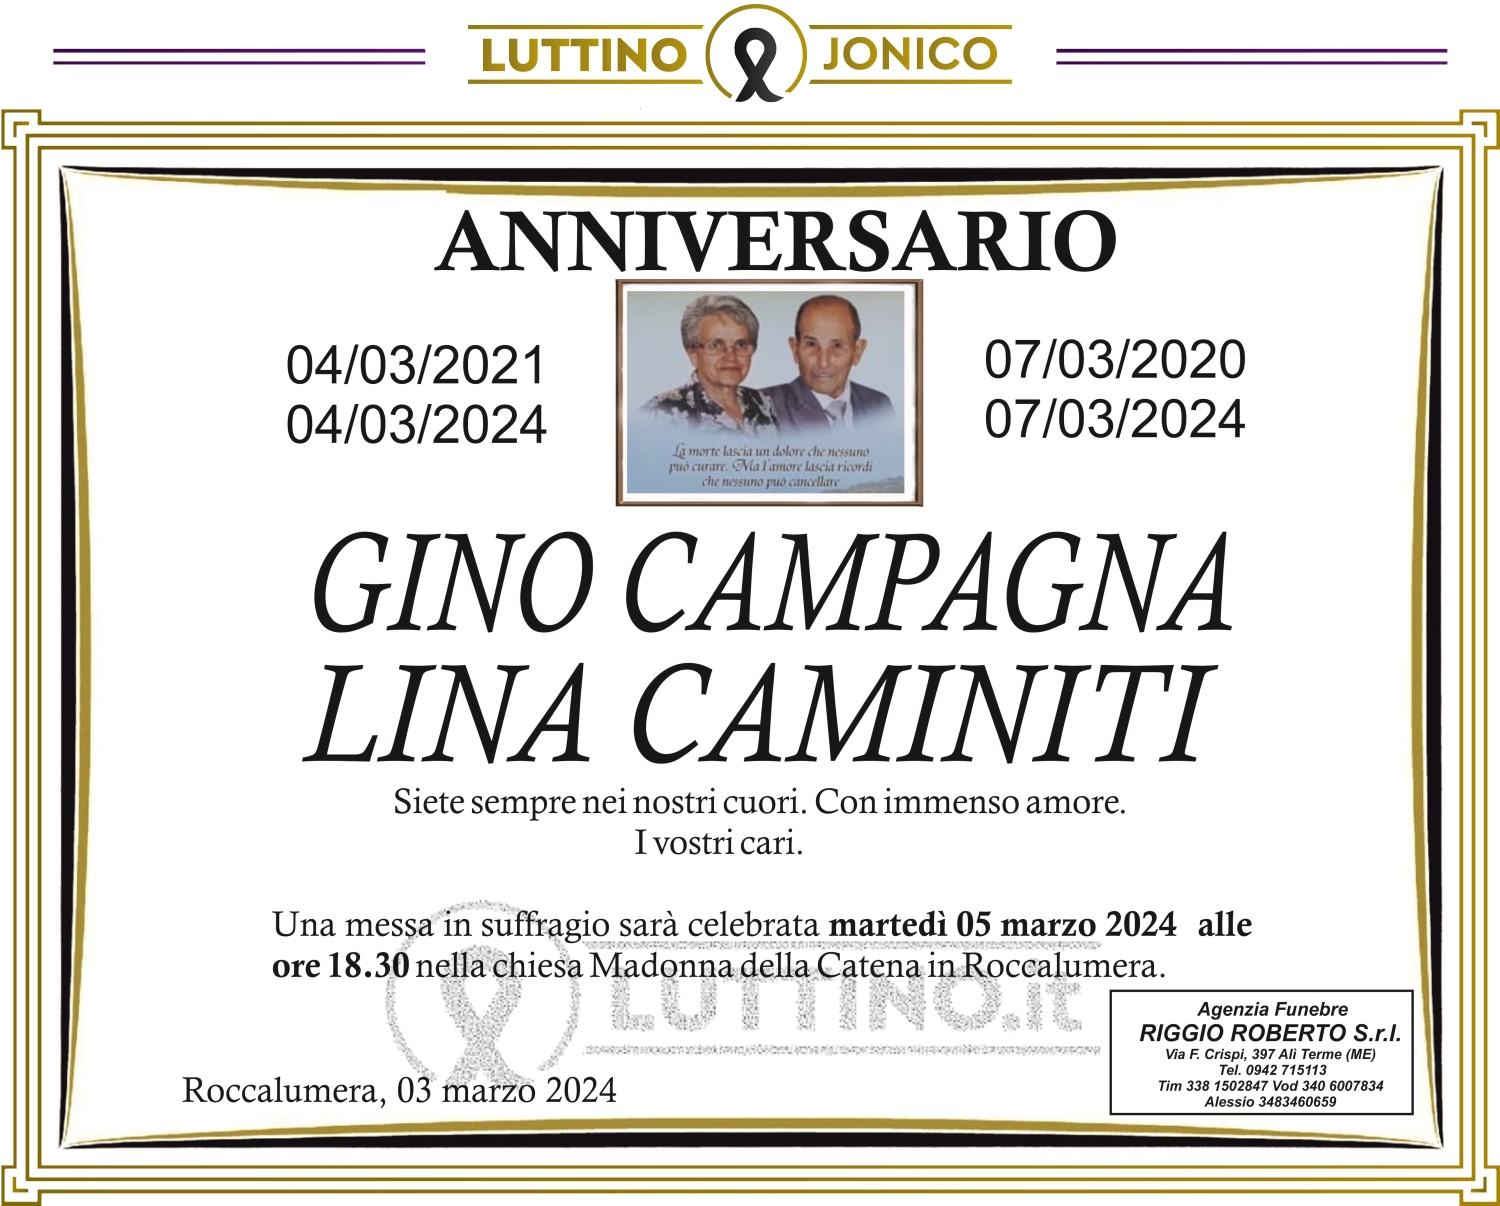 Lina Caminiti e Gino Campagna 